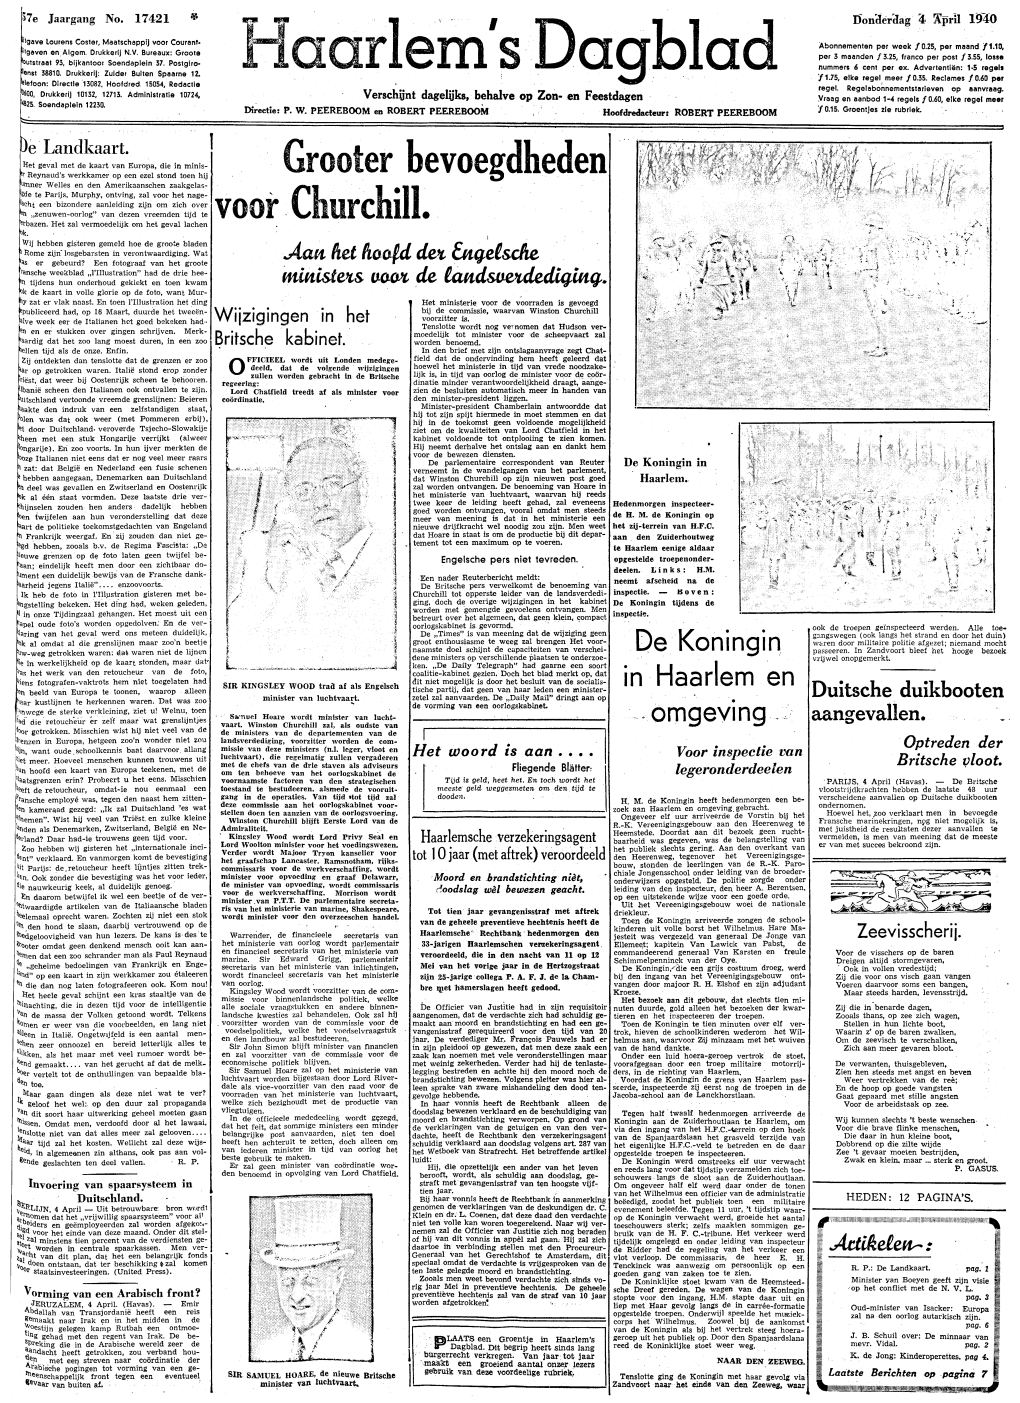 Haarlem's Dagblad